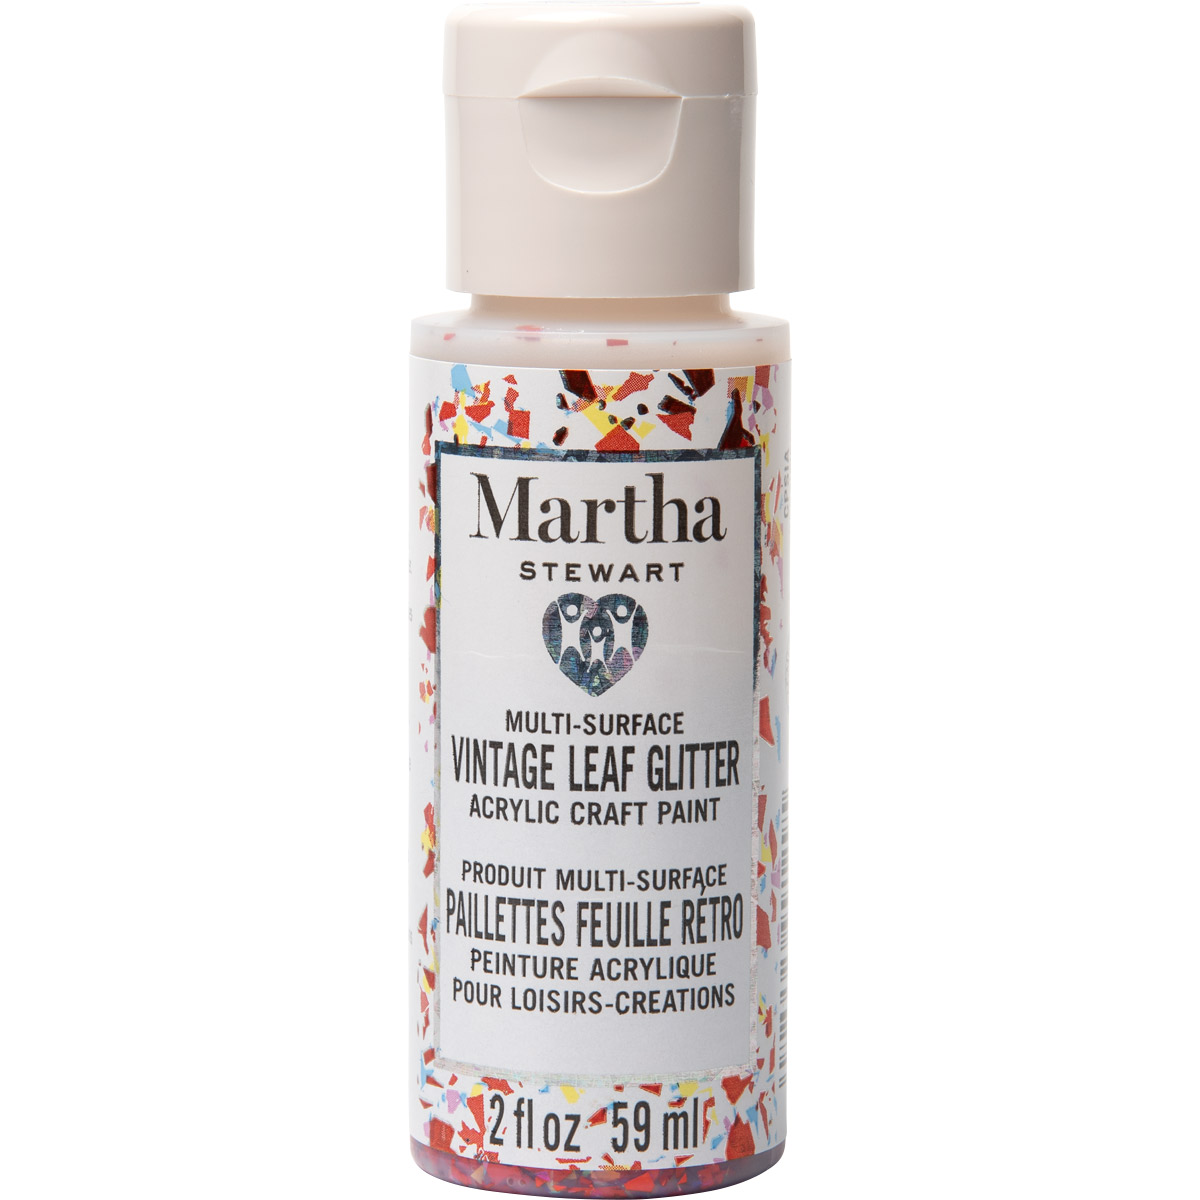 Martha Stewart ® Multi-Surface Vintage Leaf Glitter Acrylic Craft Paint CPSIA - Orange Sorbet, 2 oz.